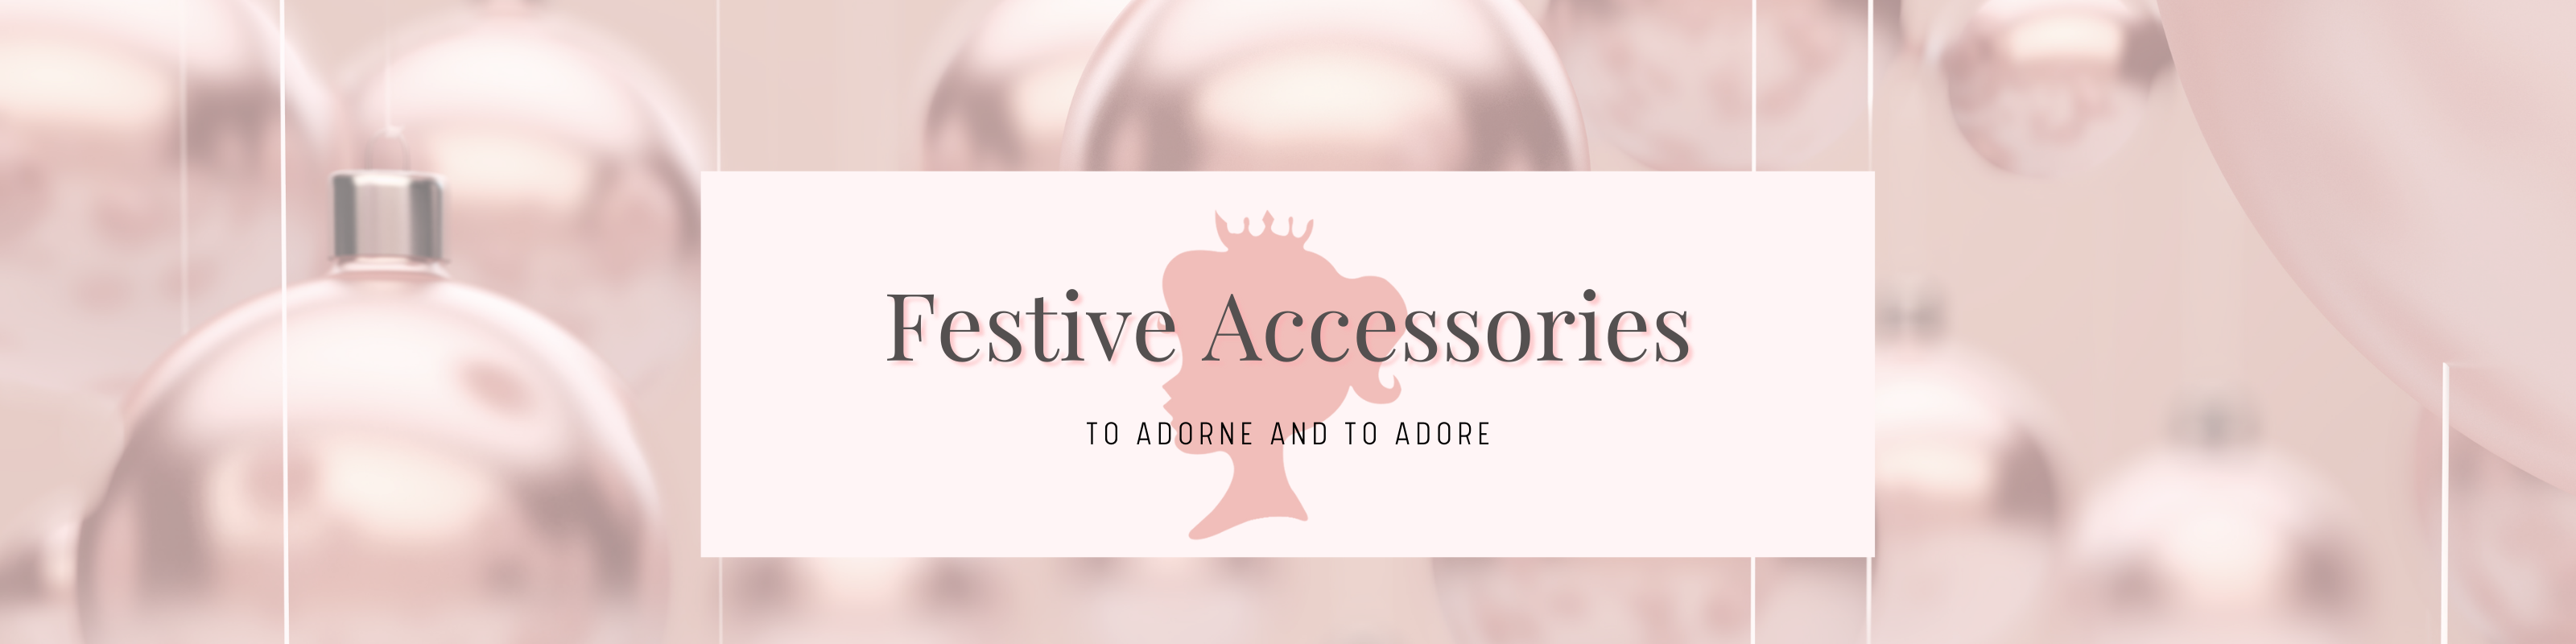 Festive Accessories